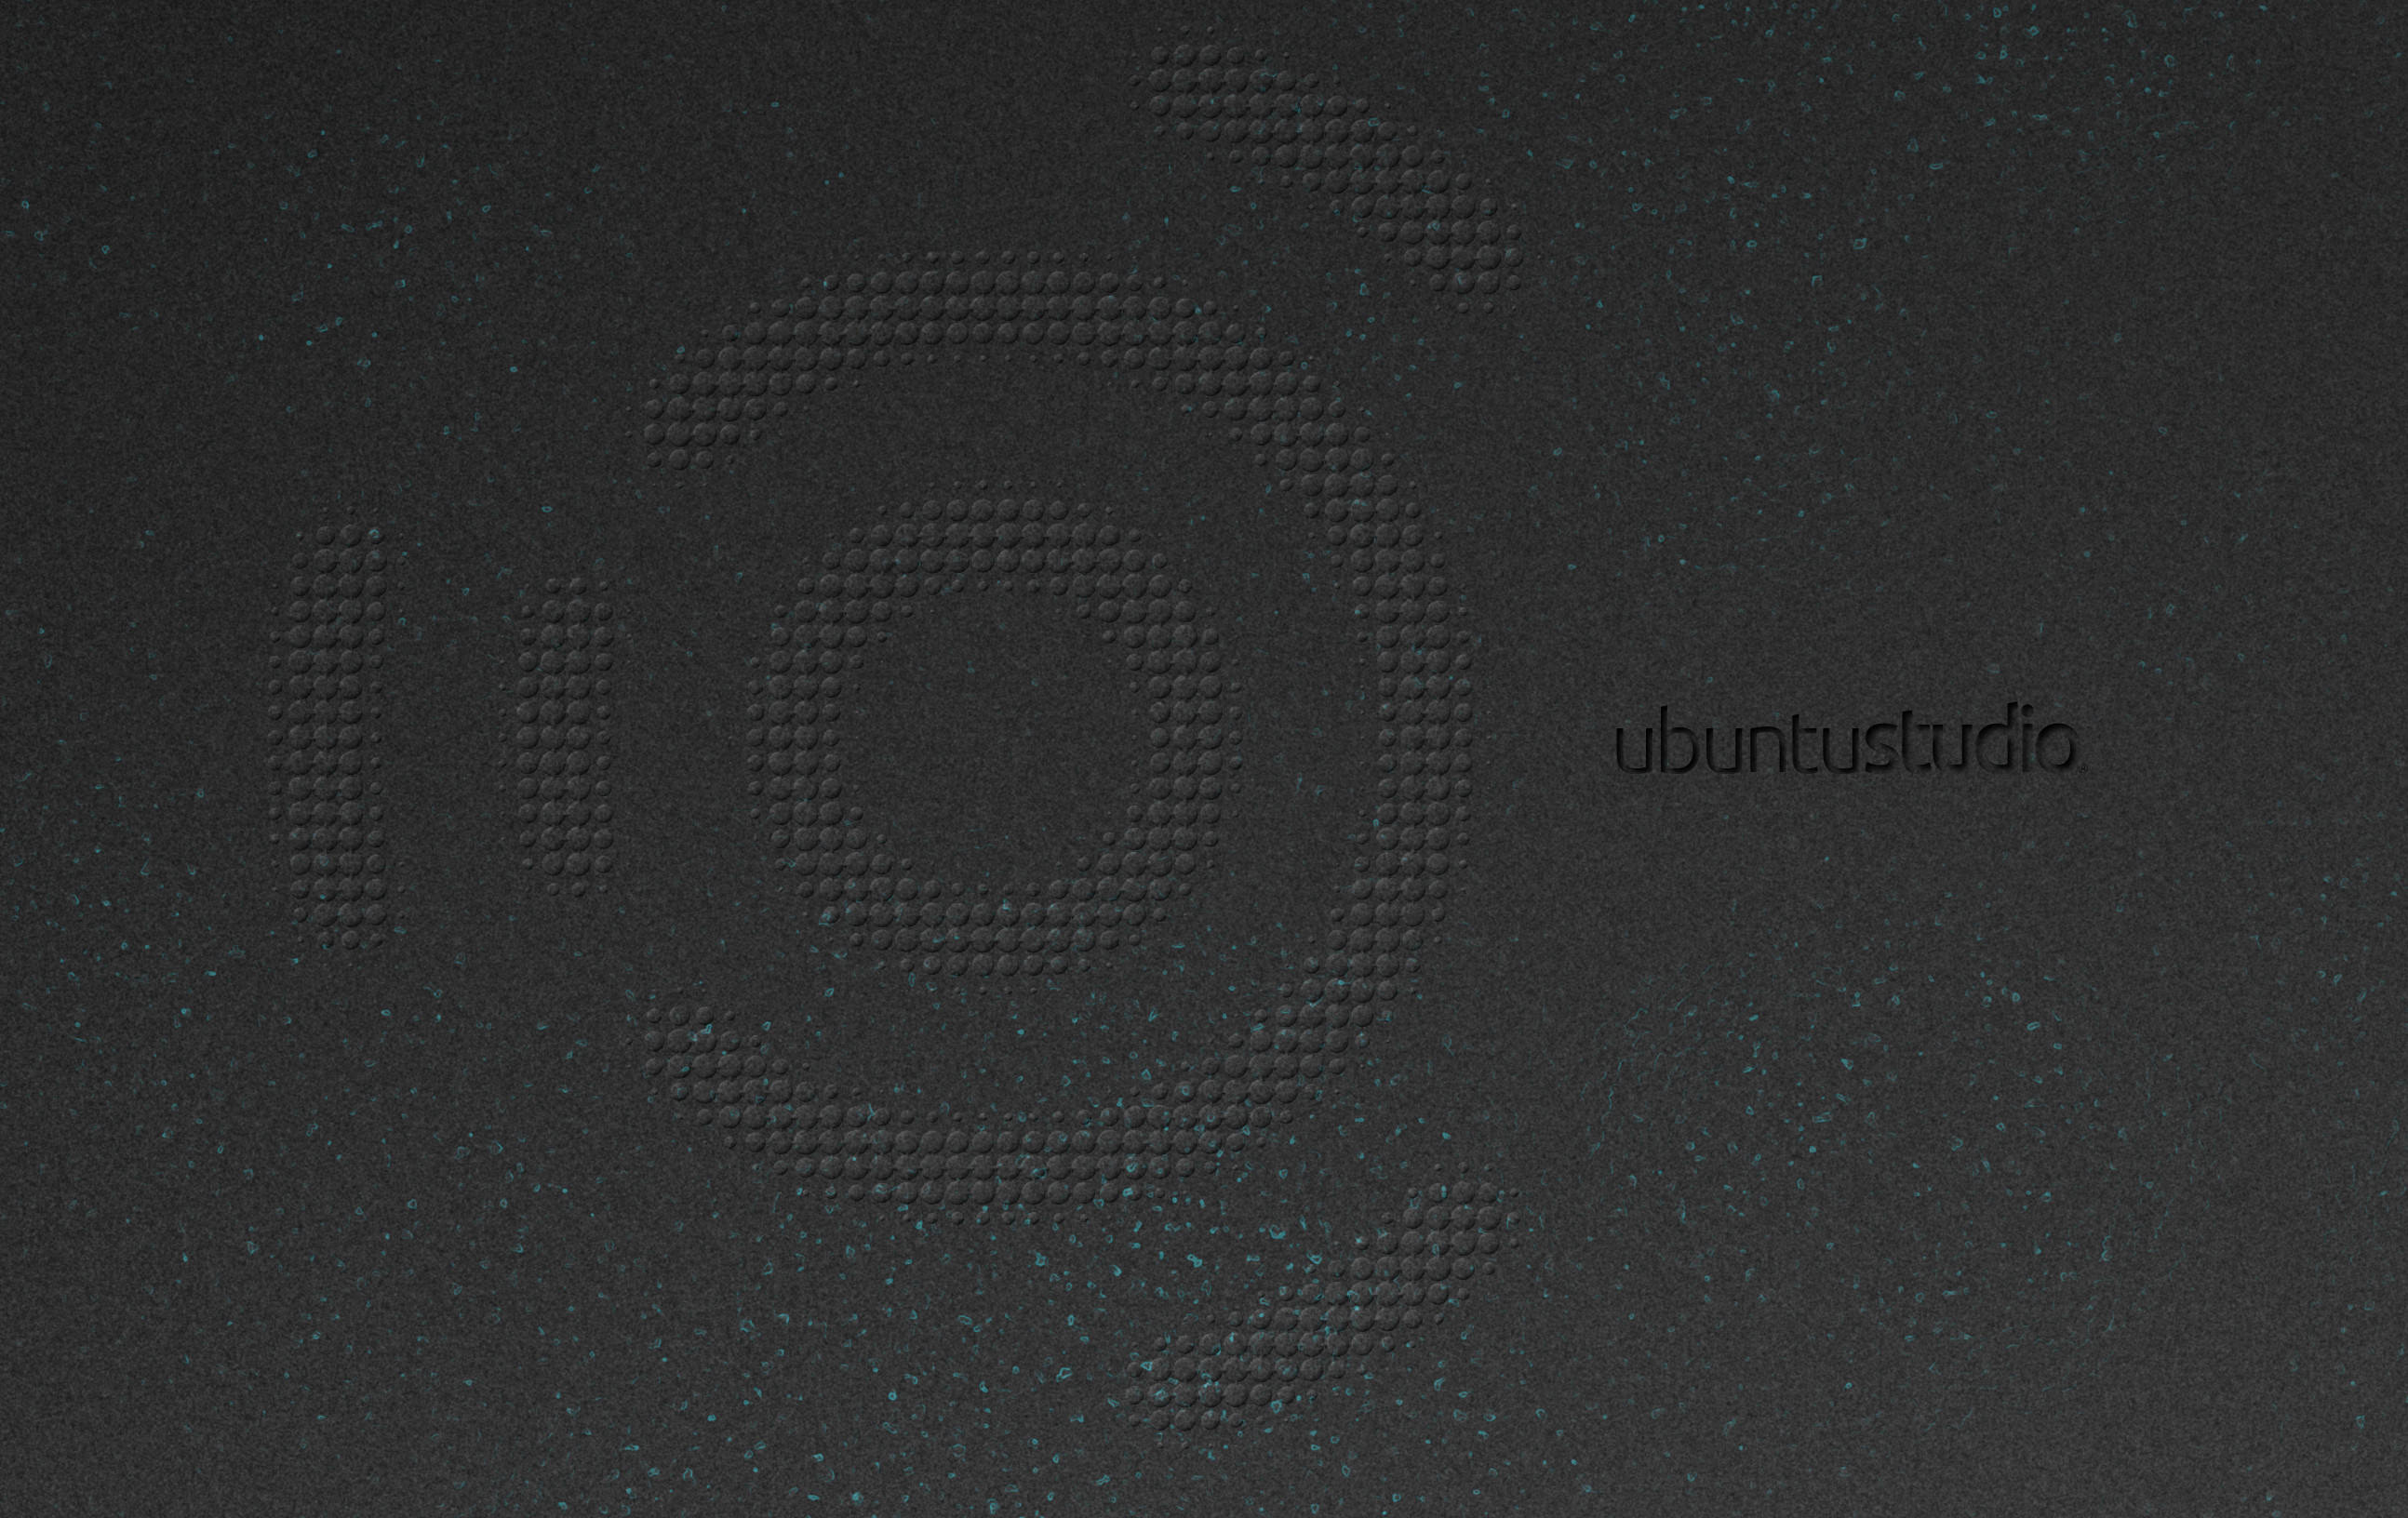 Ubuntu Studio - Mineral Sparks Improved